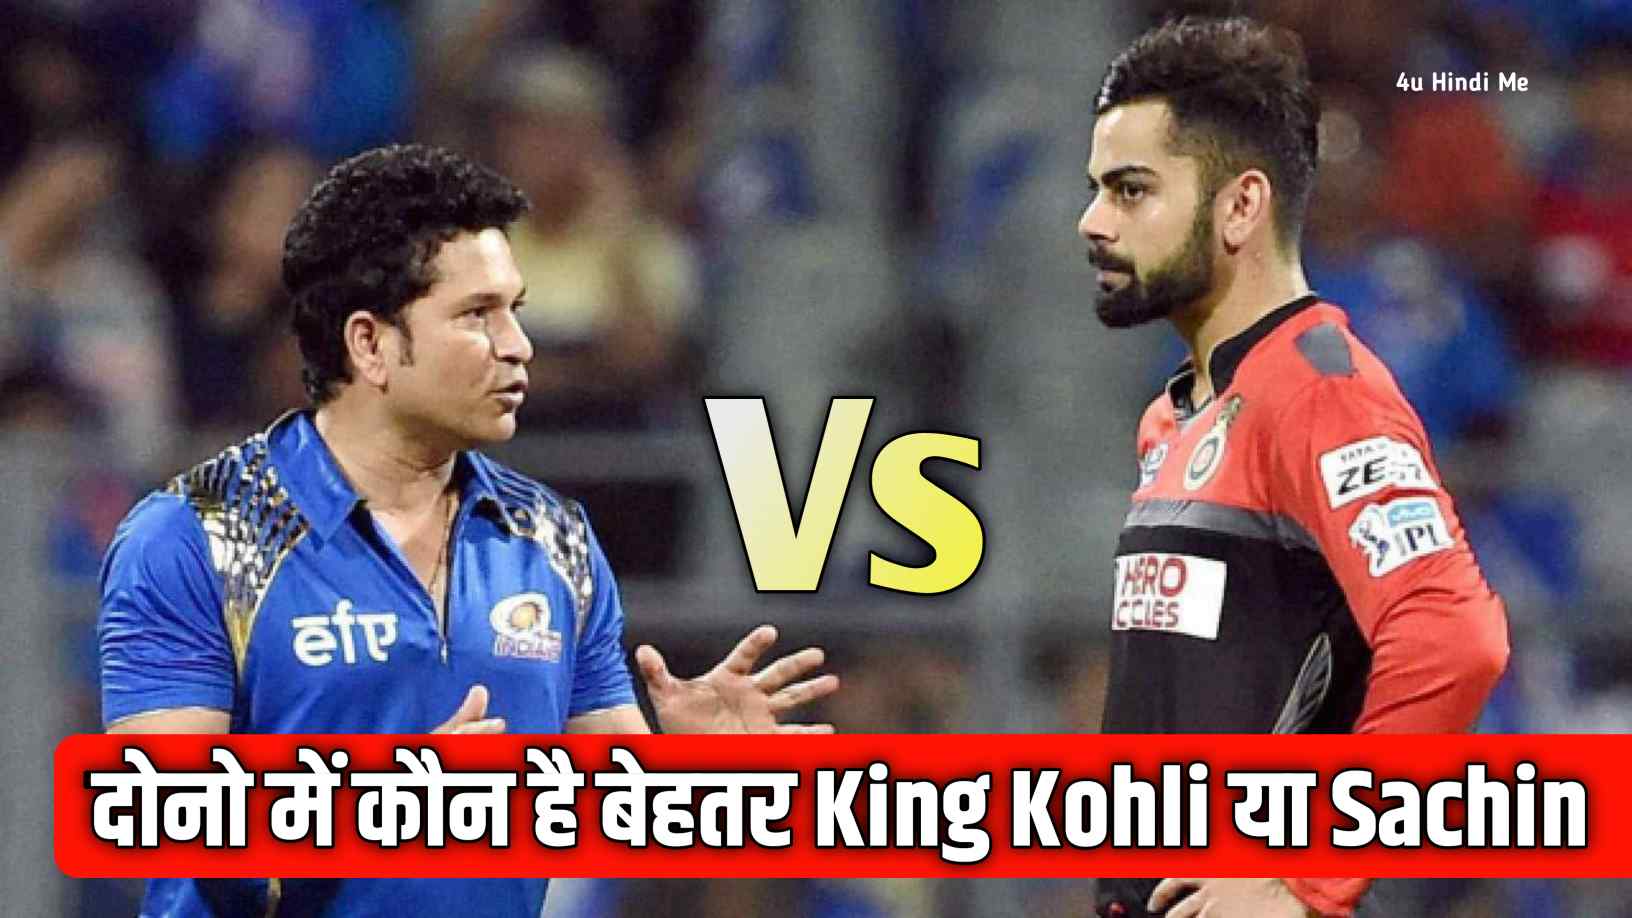 Virat Sachin Record: कौन है बेहतर King Kohli या Sachin